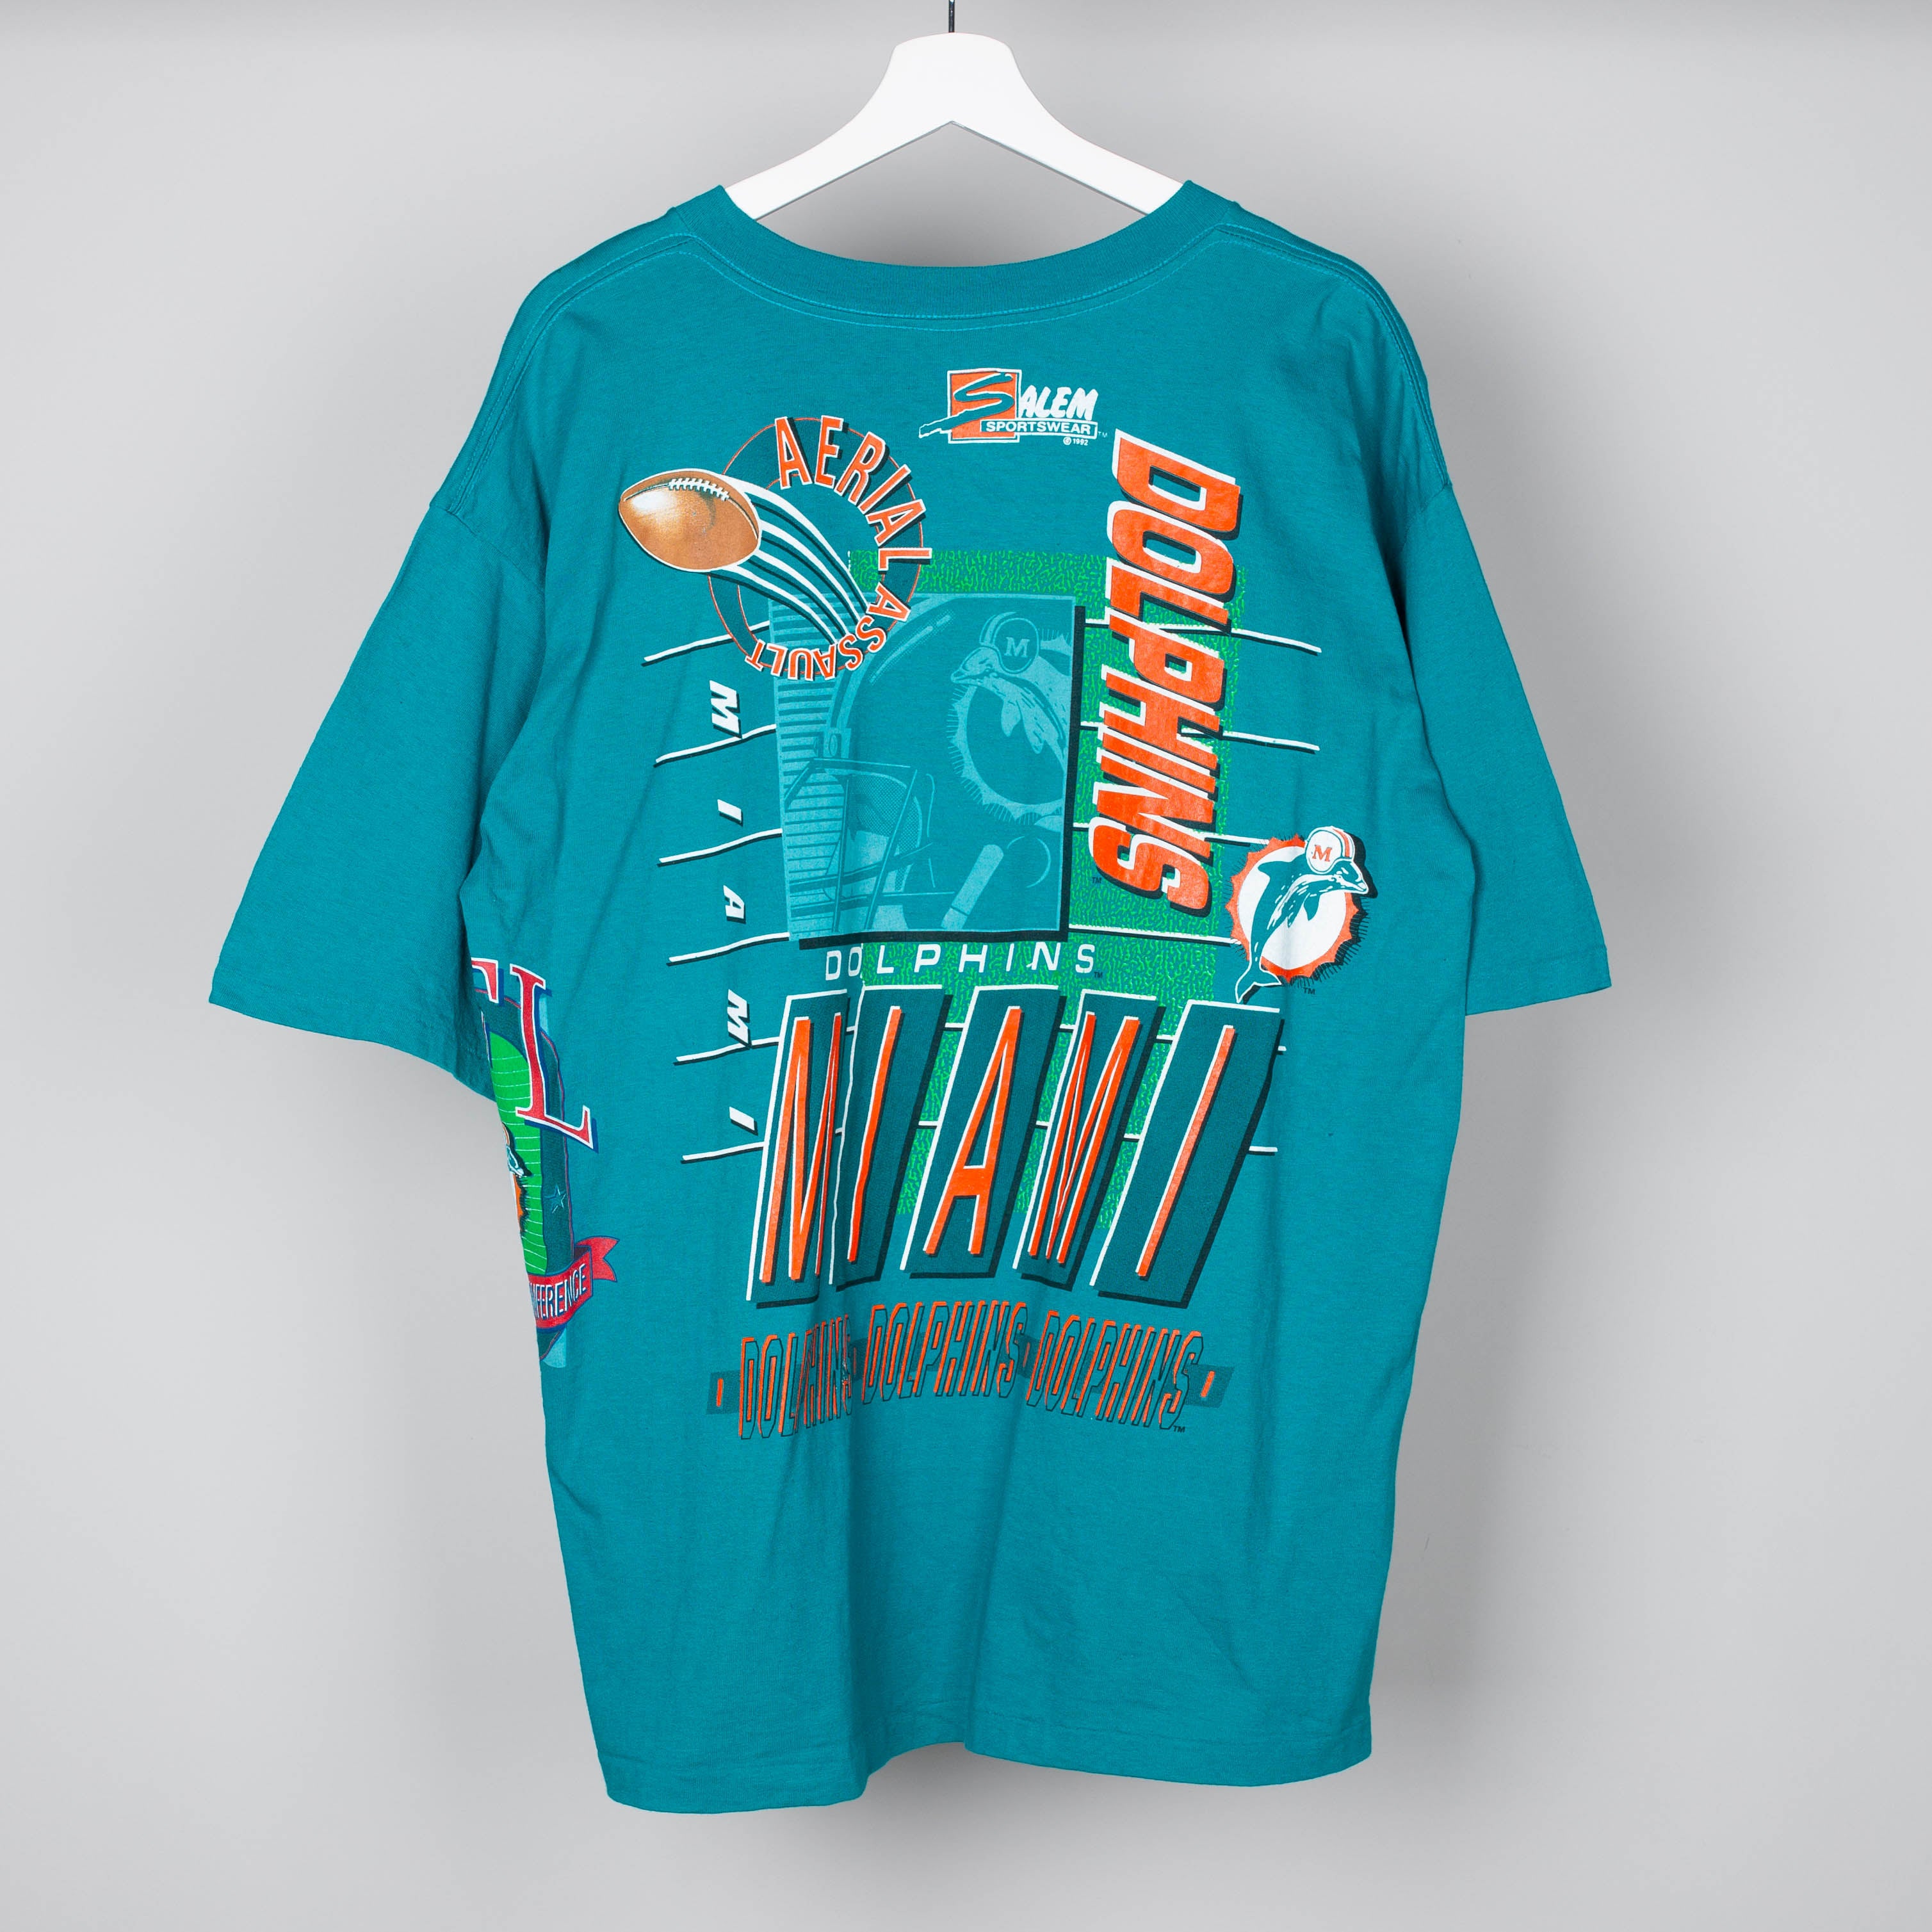 1992 Miami Dolphins T-Shirt Size XL